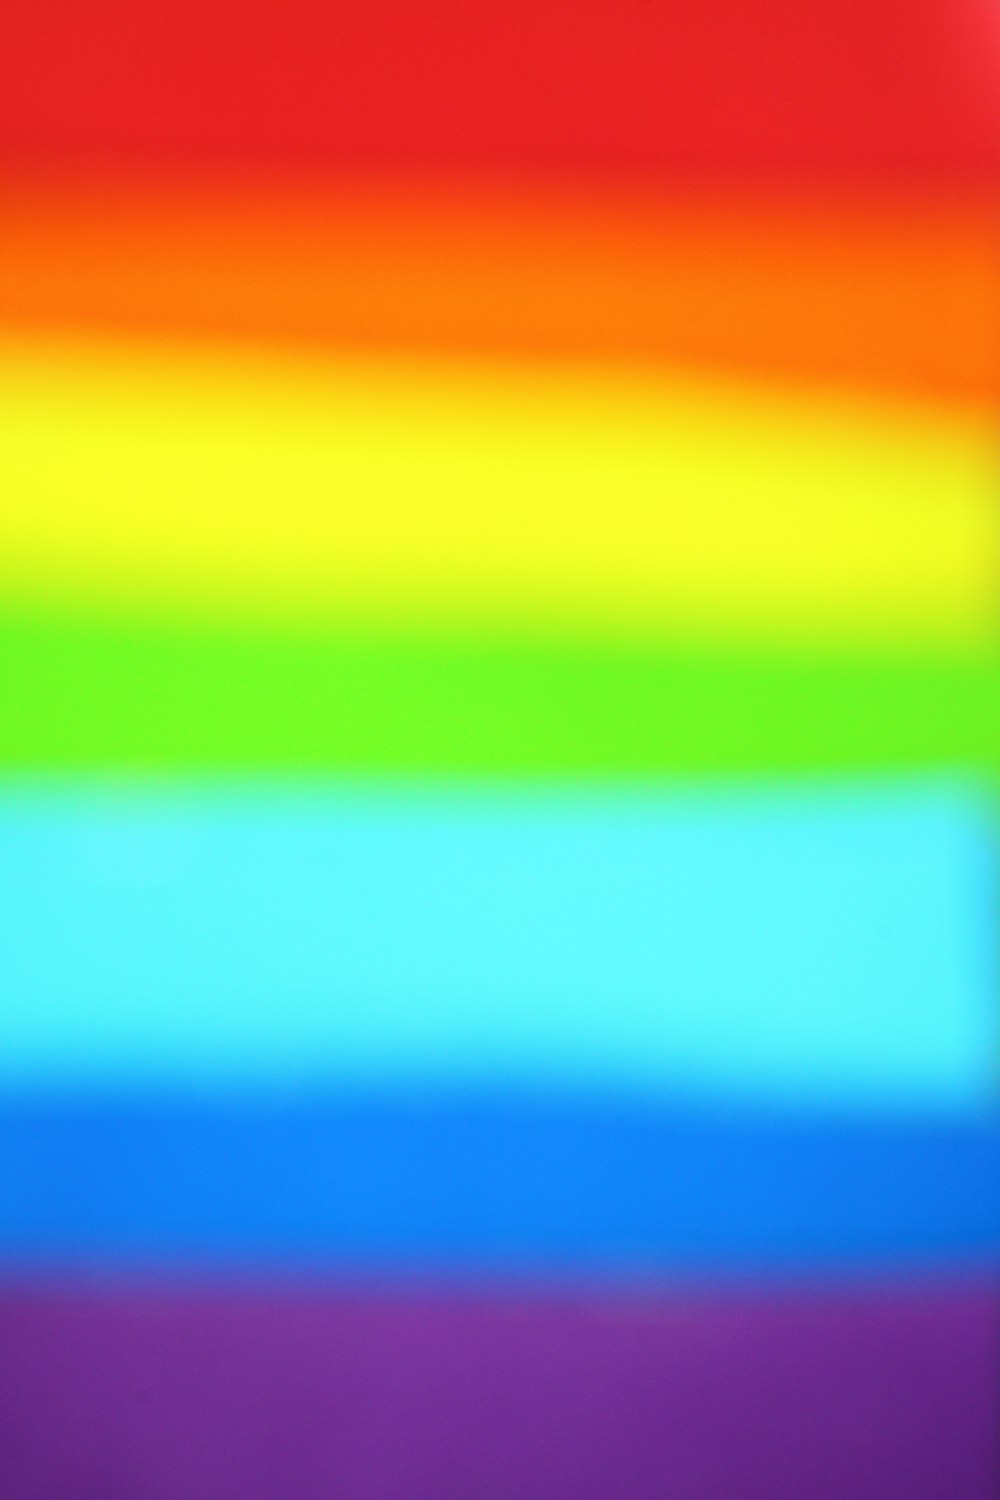 Color Spectrum Pictures | Download Free Images on Unsplash